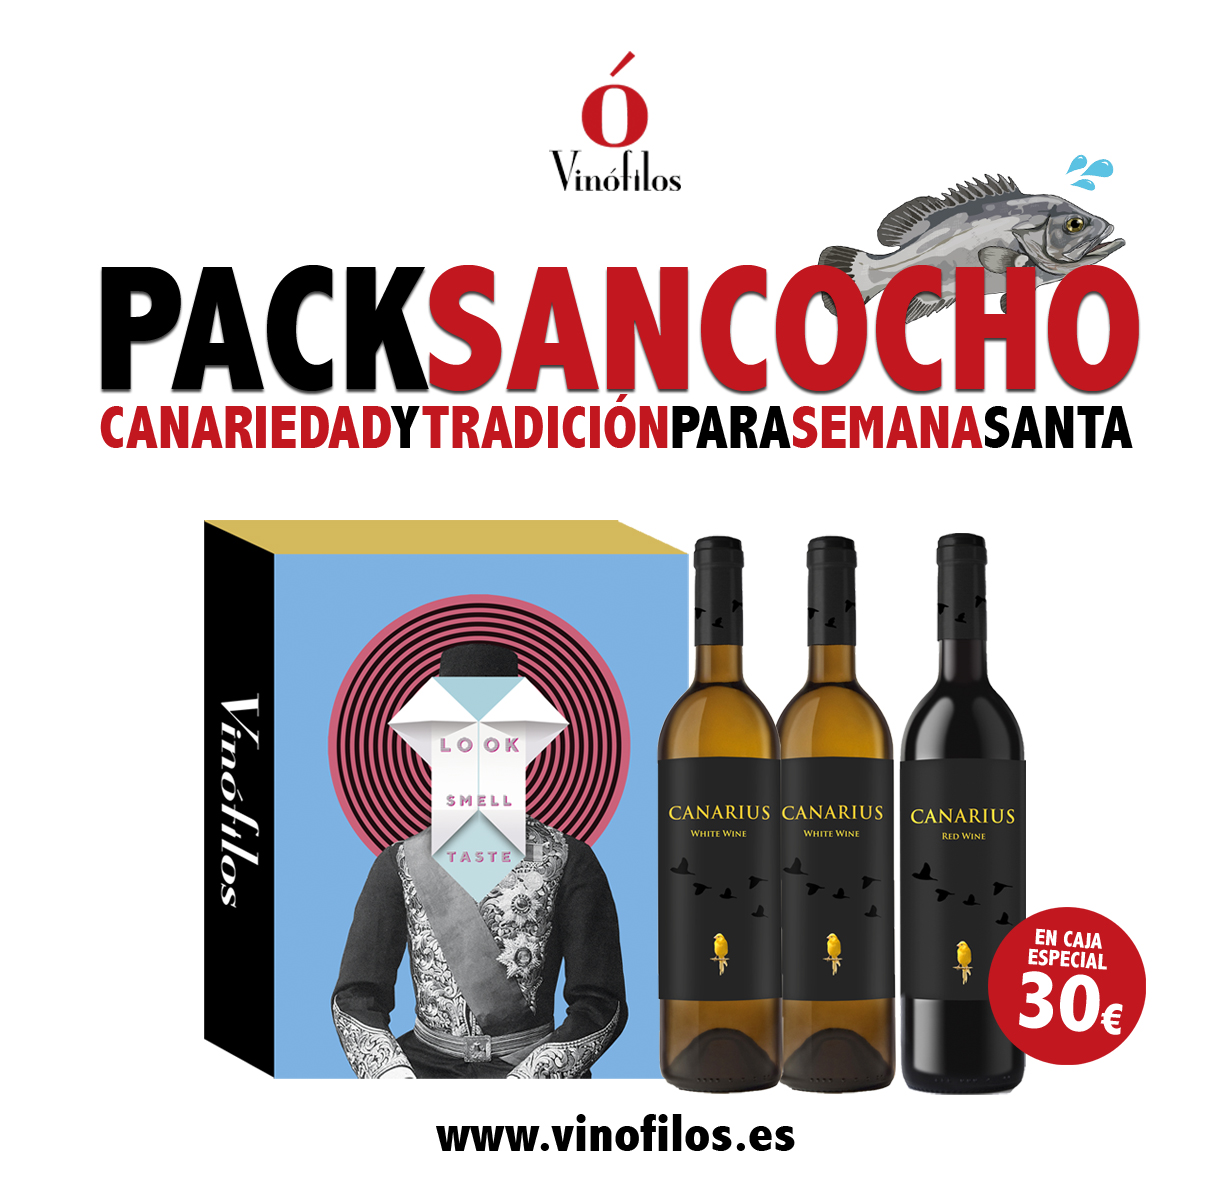 Pack Sancocho, especial para Semana Santa